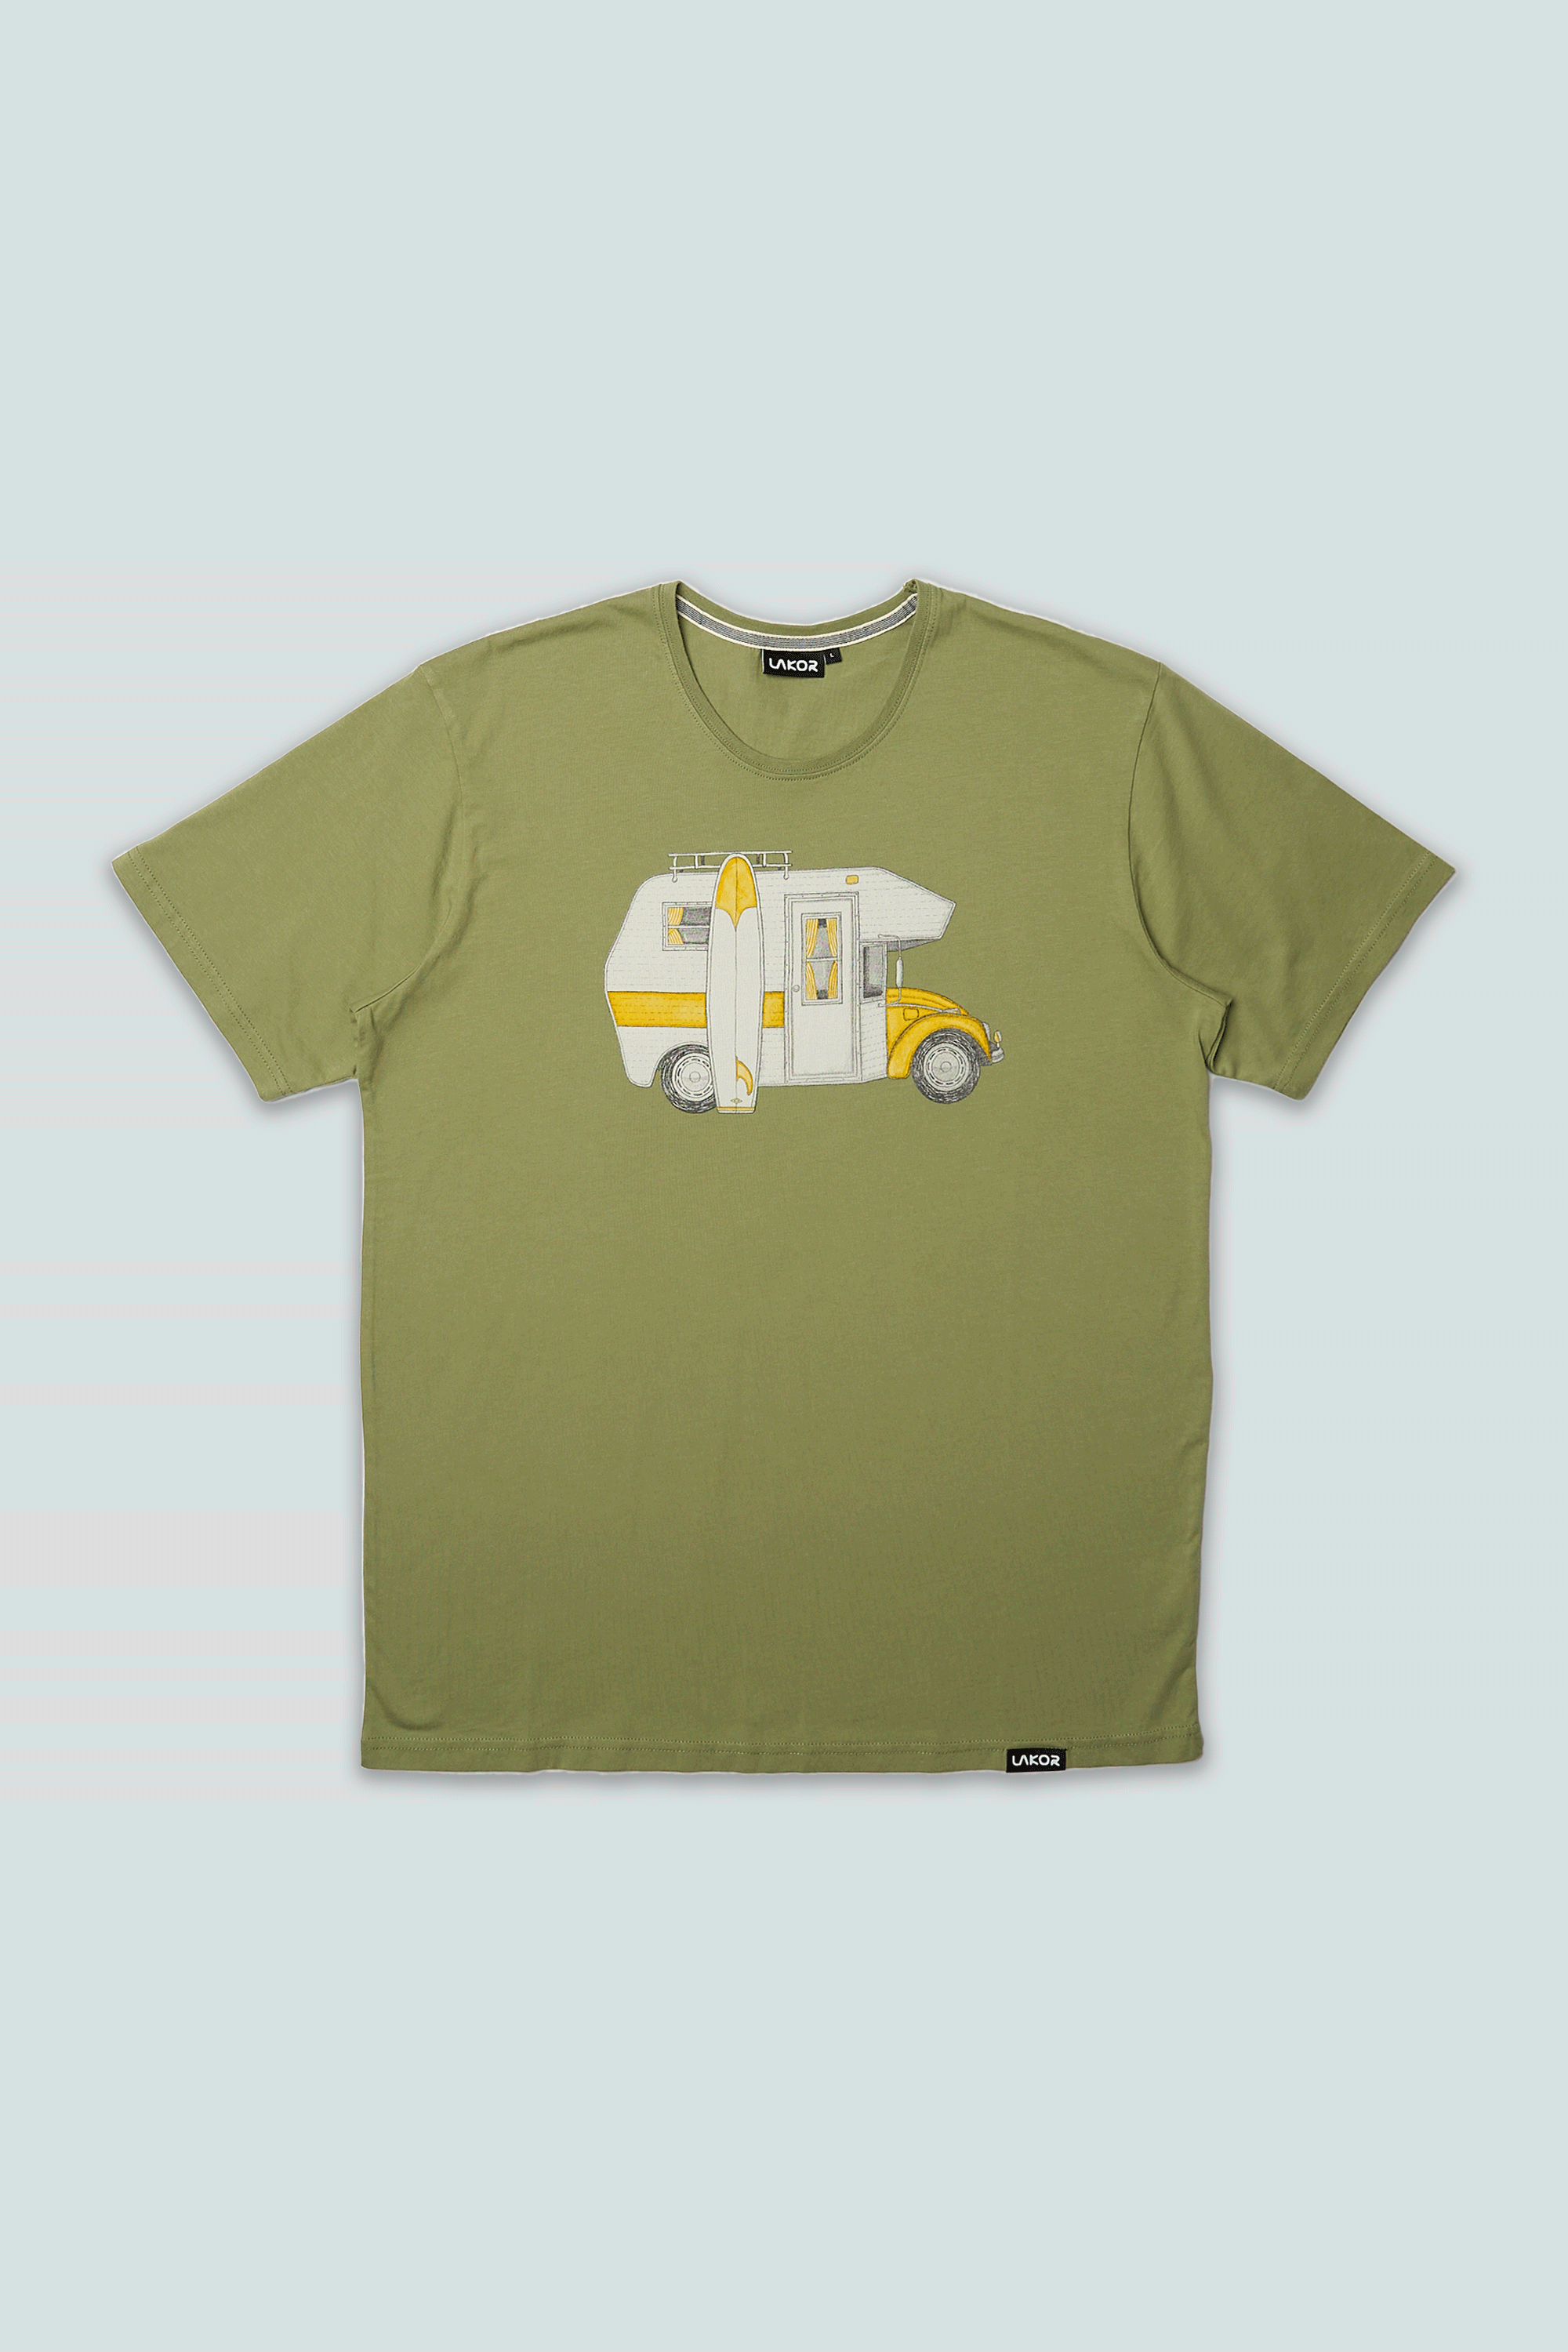 Car Camper T-shirt (Oil Green)